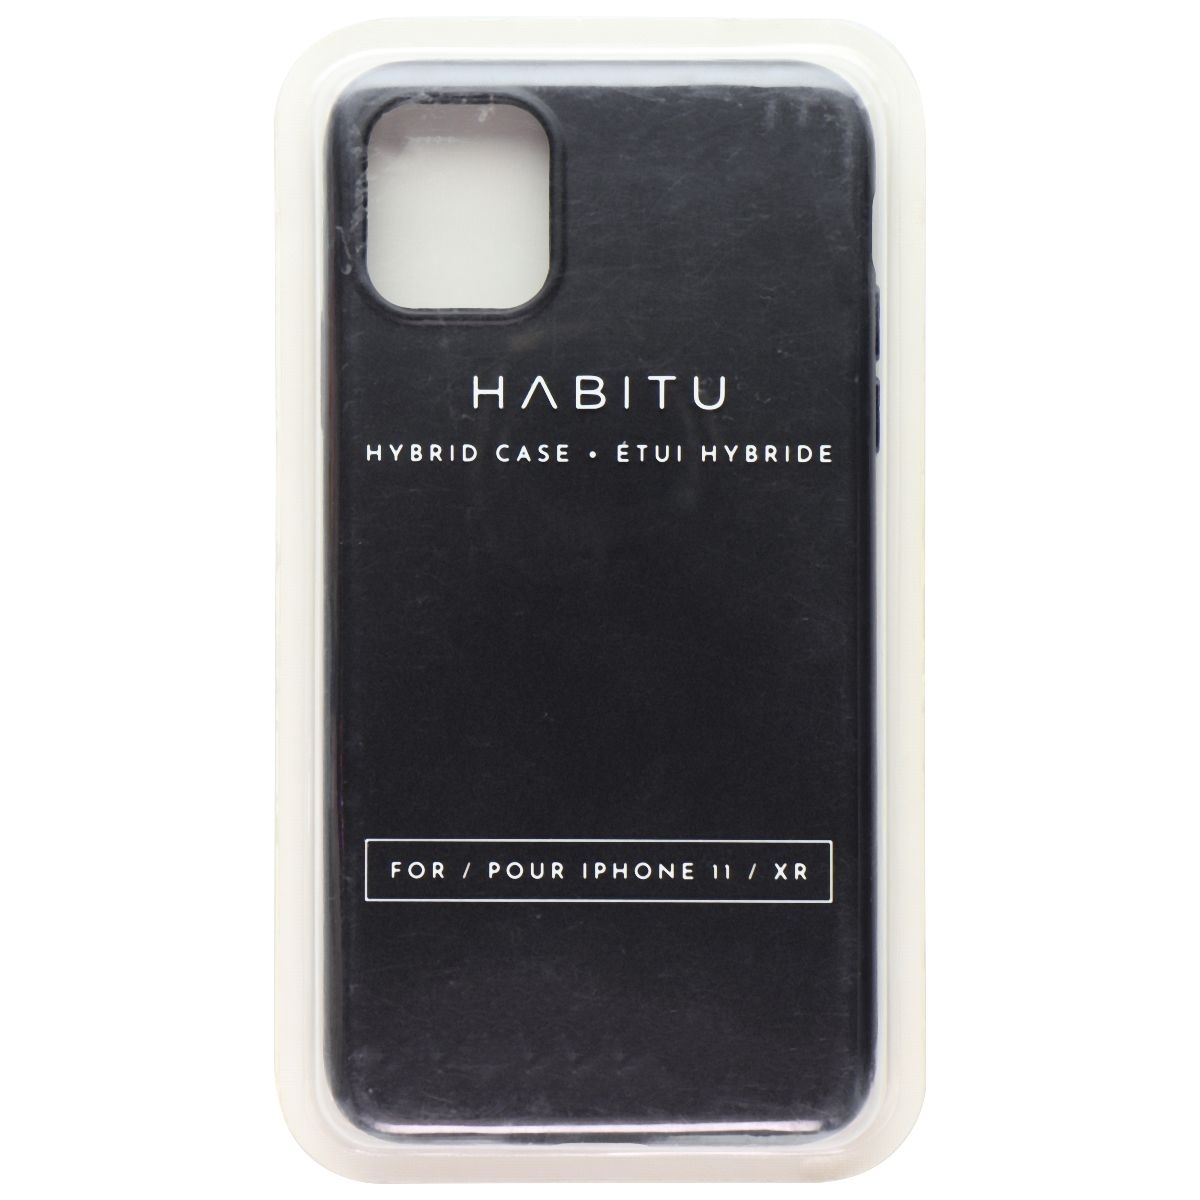 Habitu Hybrid Case For Apple IPhone 11 And IPhone XR - Black (Refurbished)